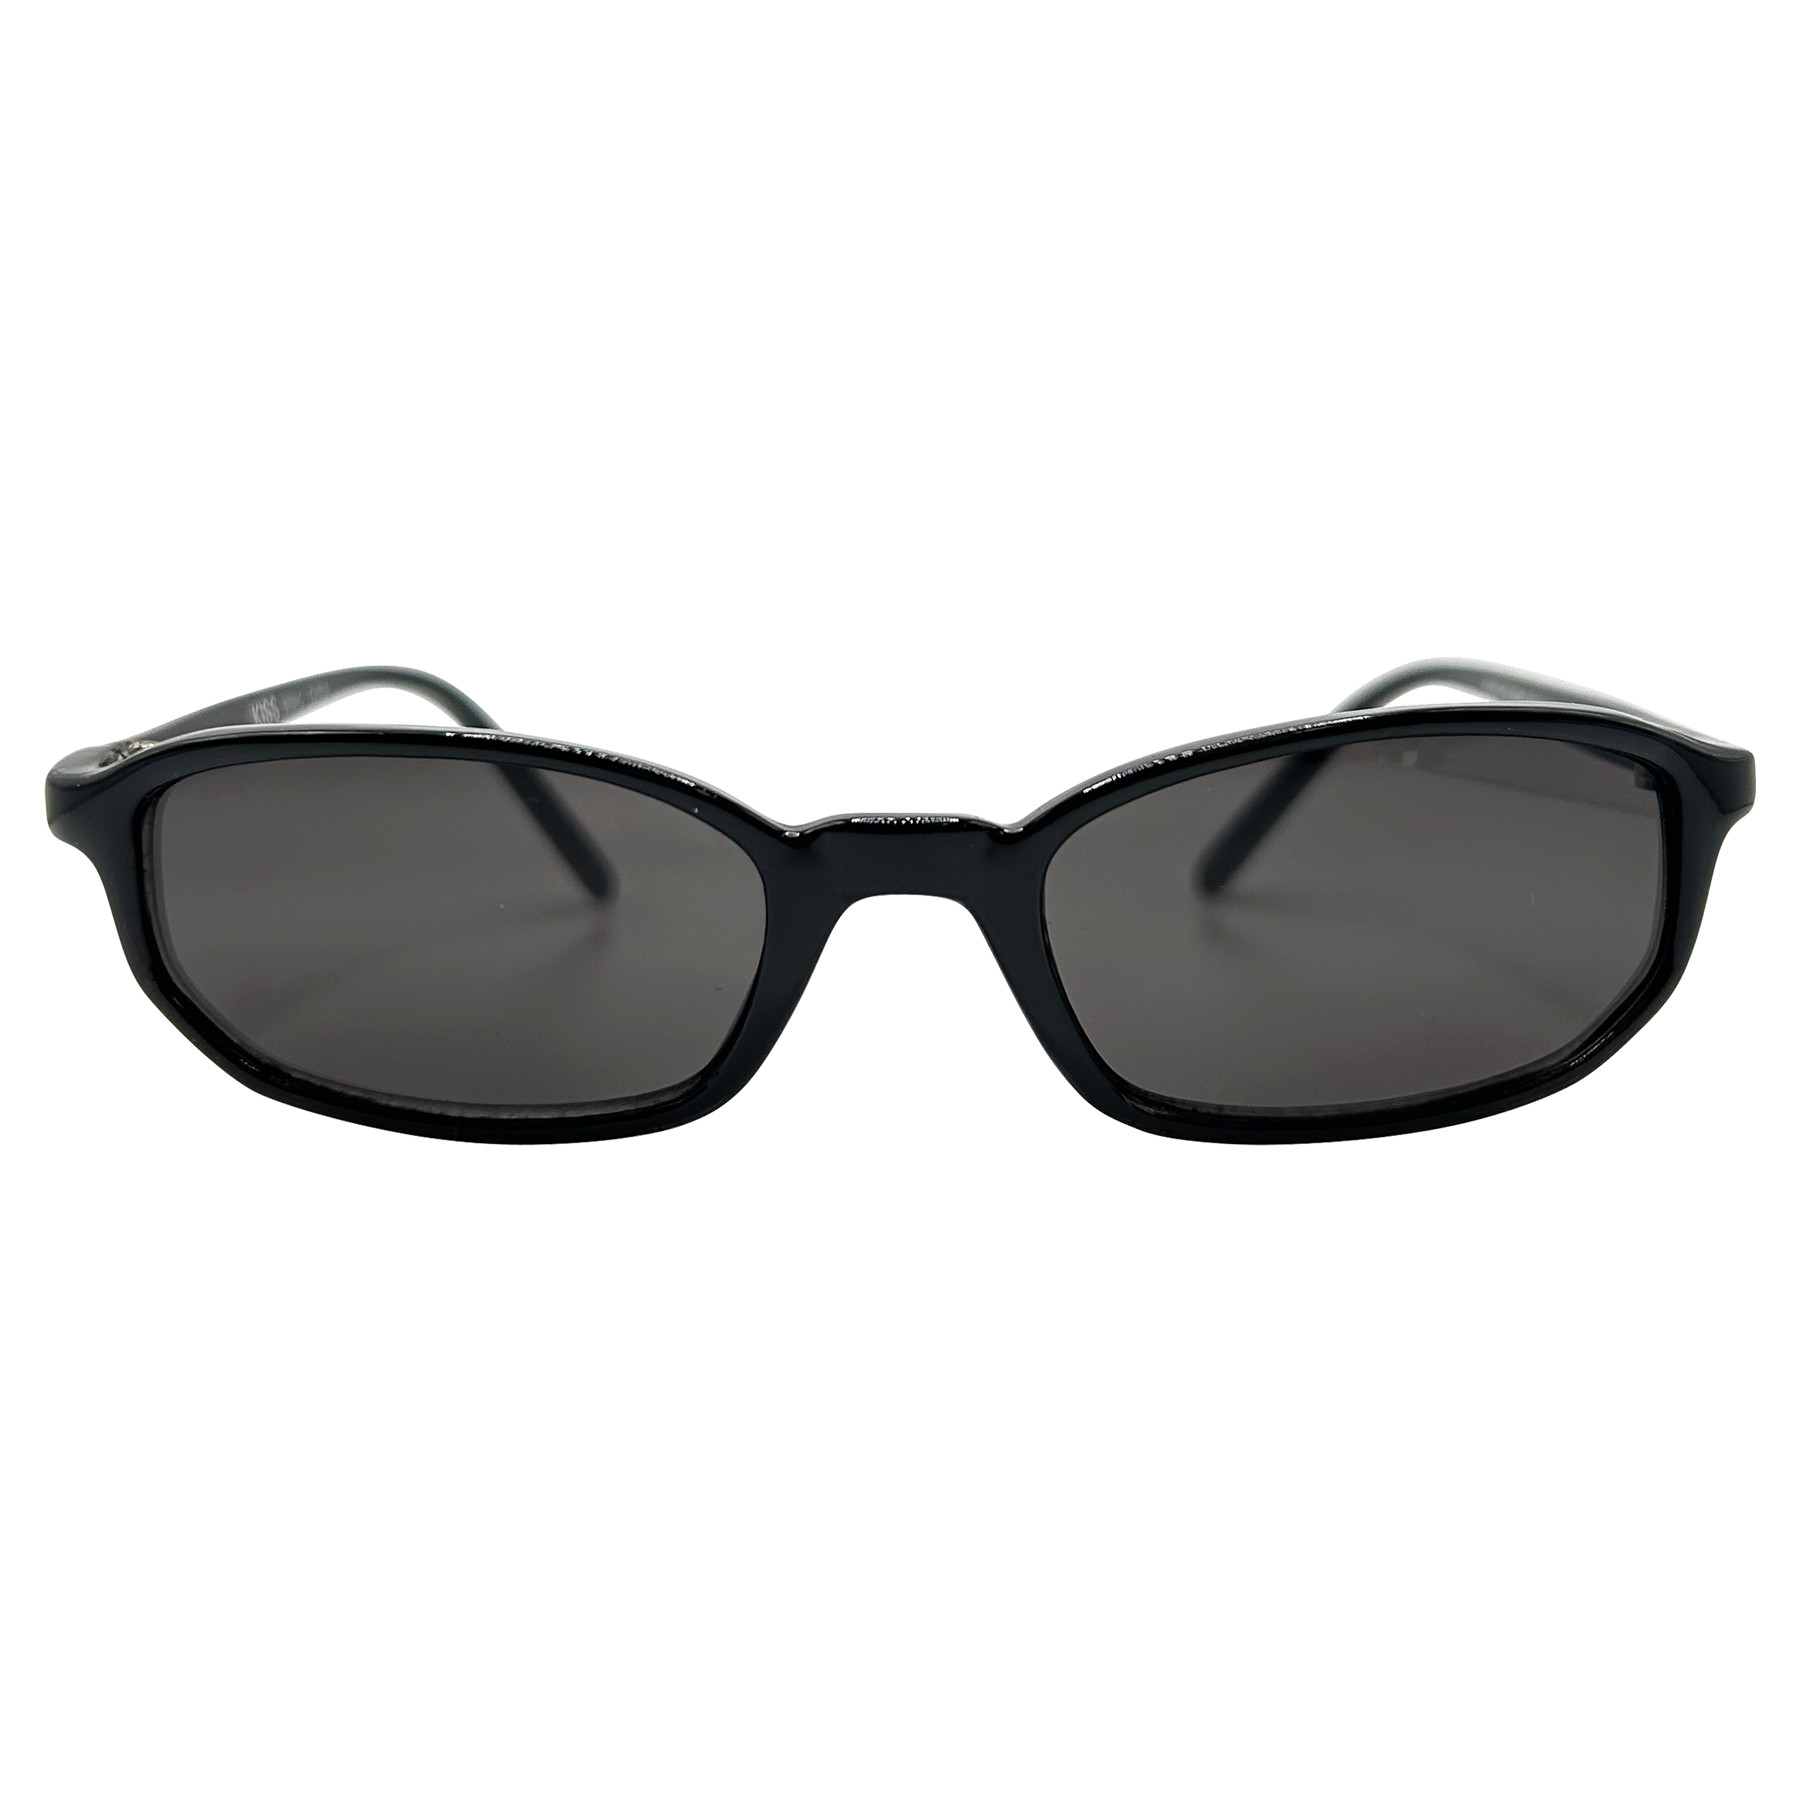 SHERLOCK Black/Super Dark Square 90s Sunglasses